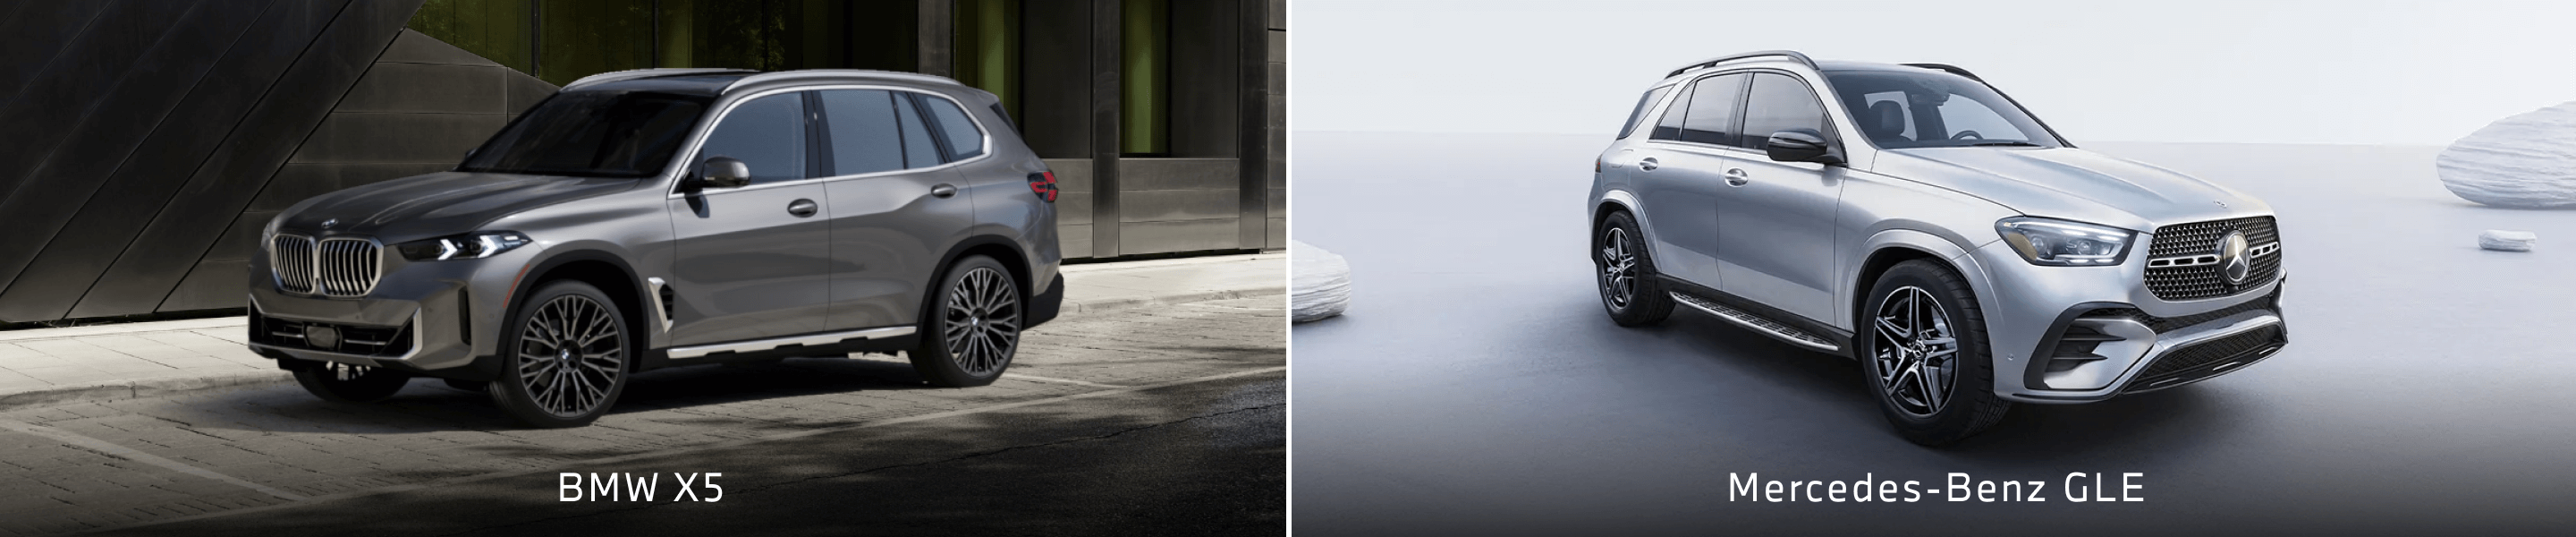 BMW X5 vs. Mercedes-Benz GLE